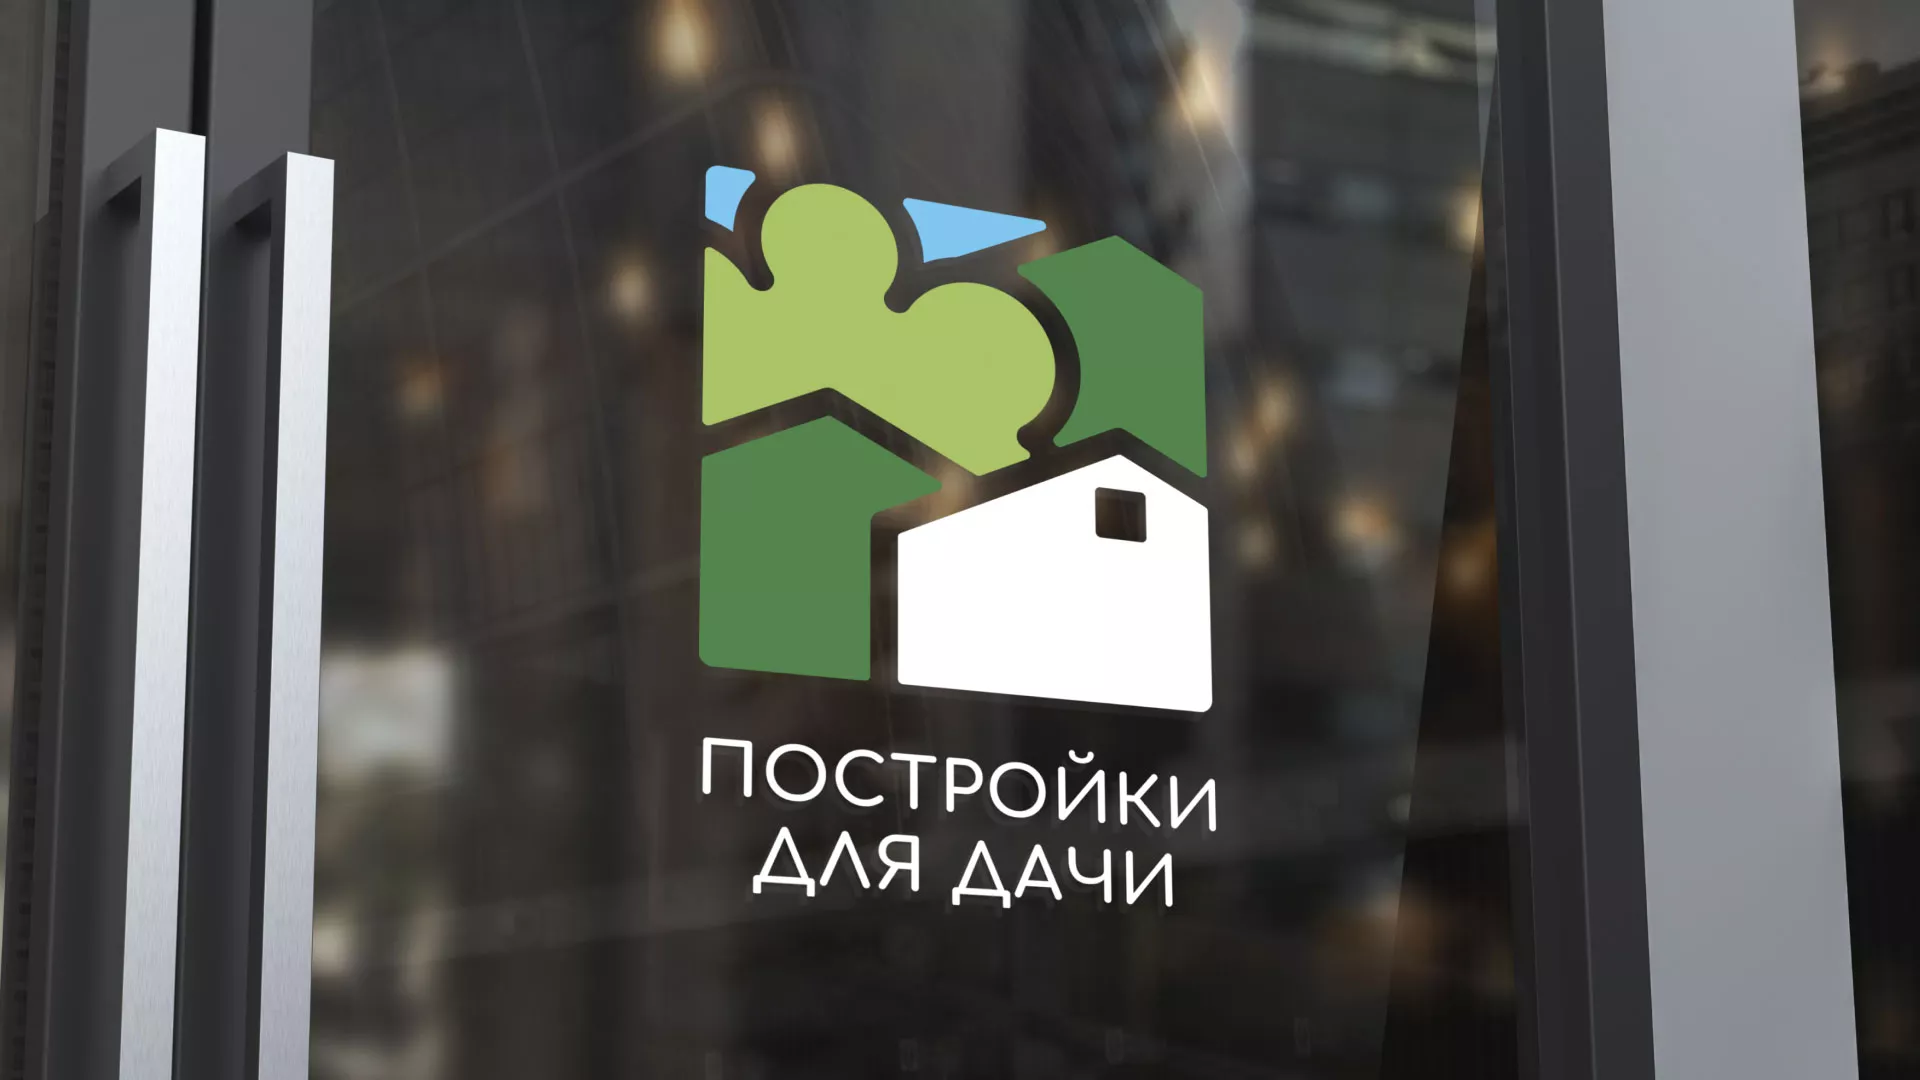 Разработка логотипа в Валдае для компании «Постройки для дачи»